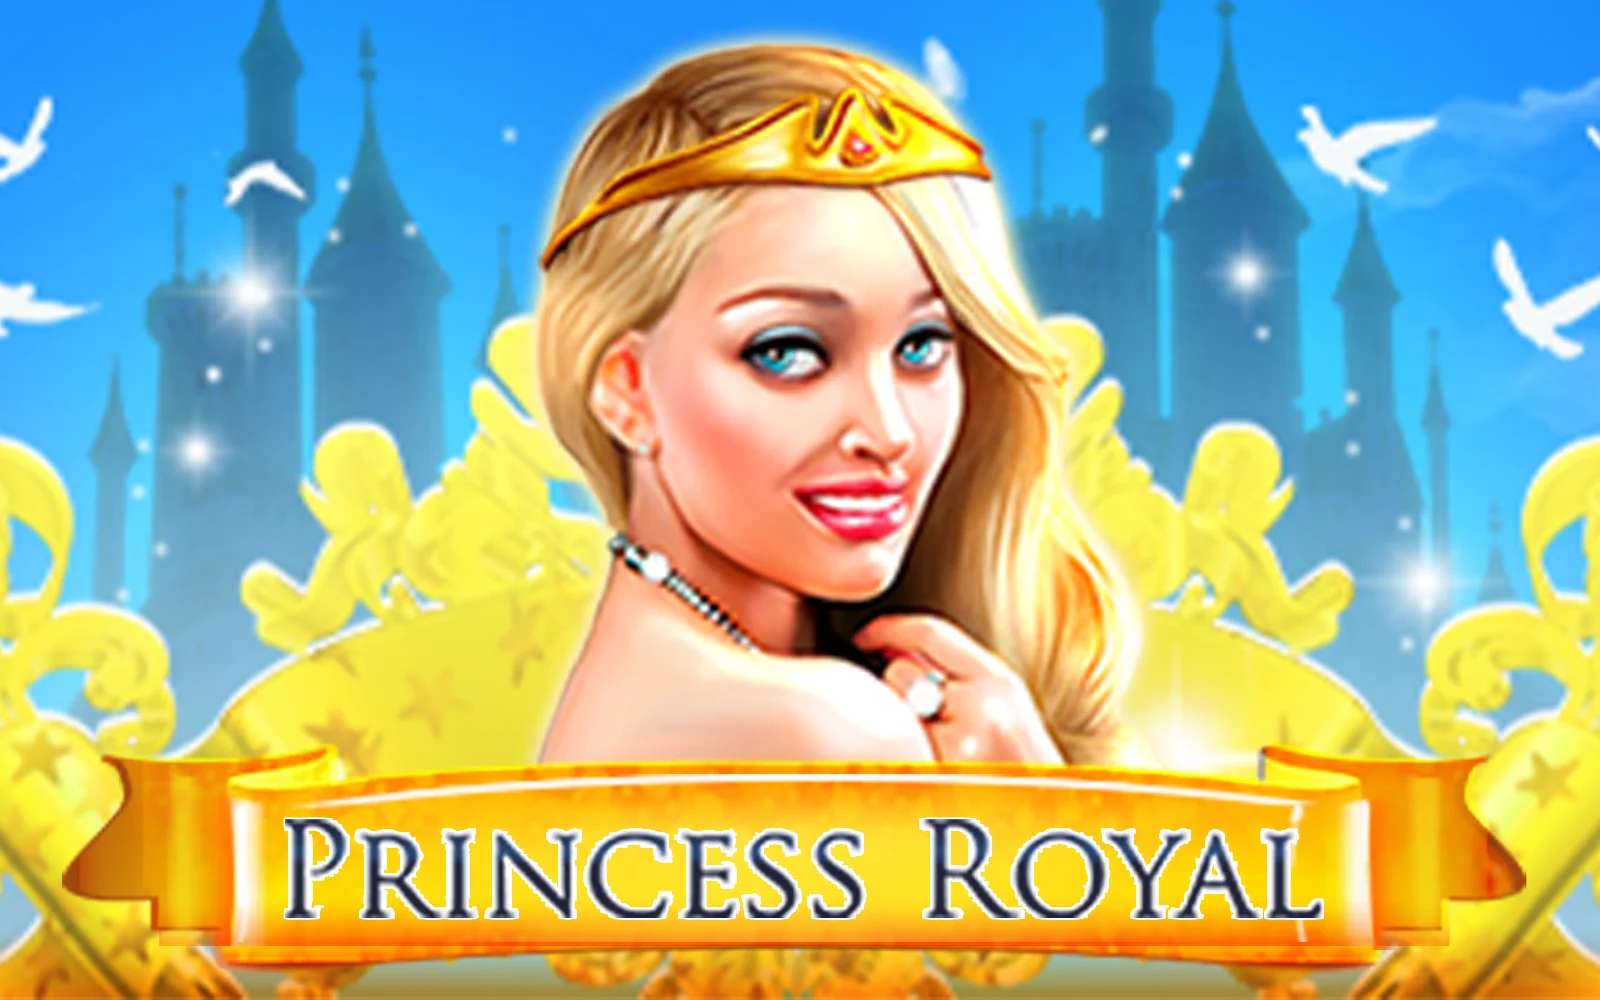 Play Princess Royal on Starcasino.be online casino